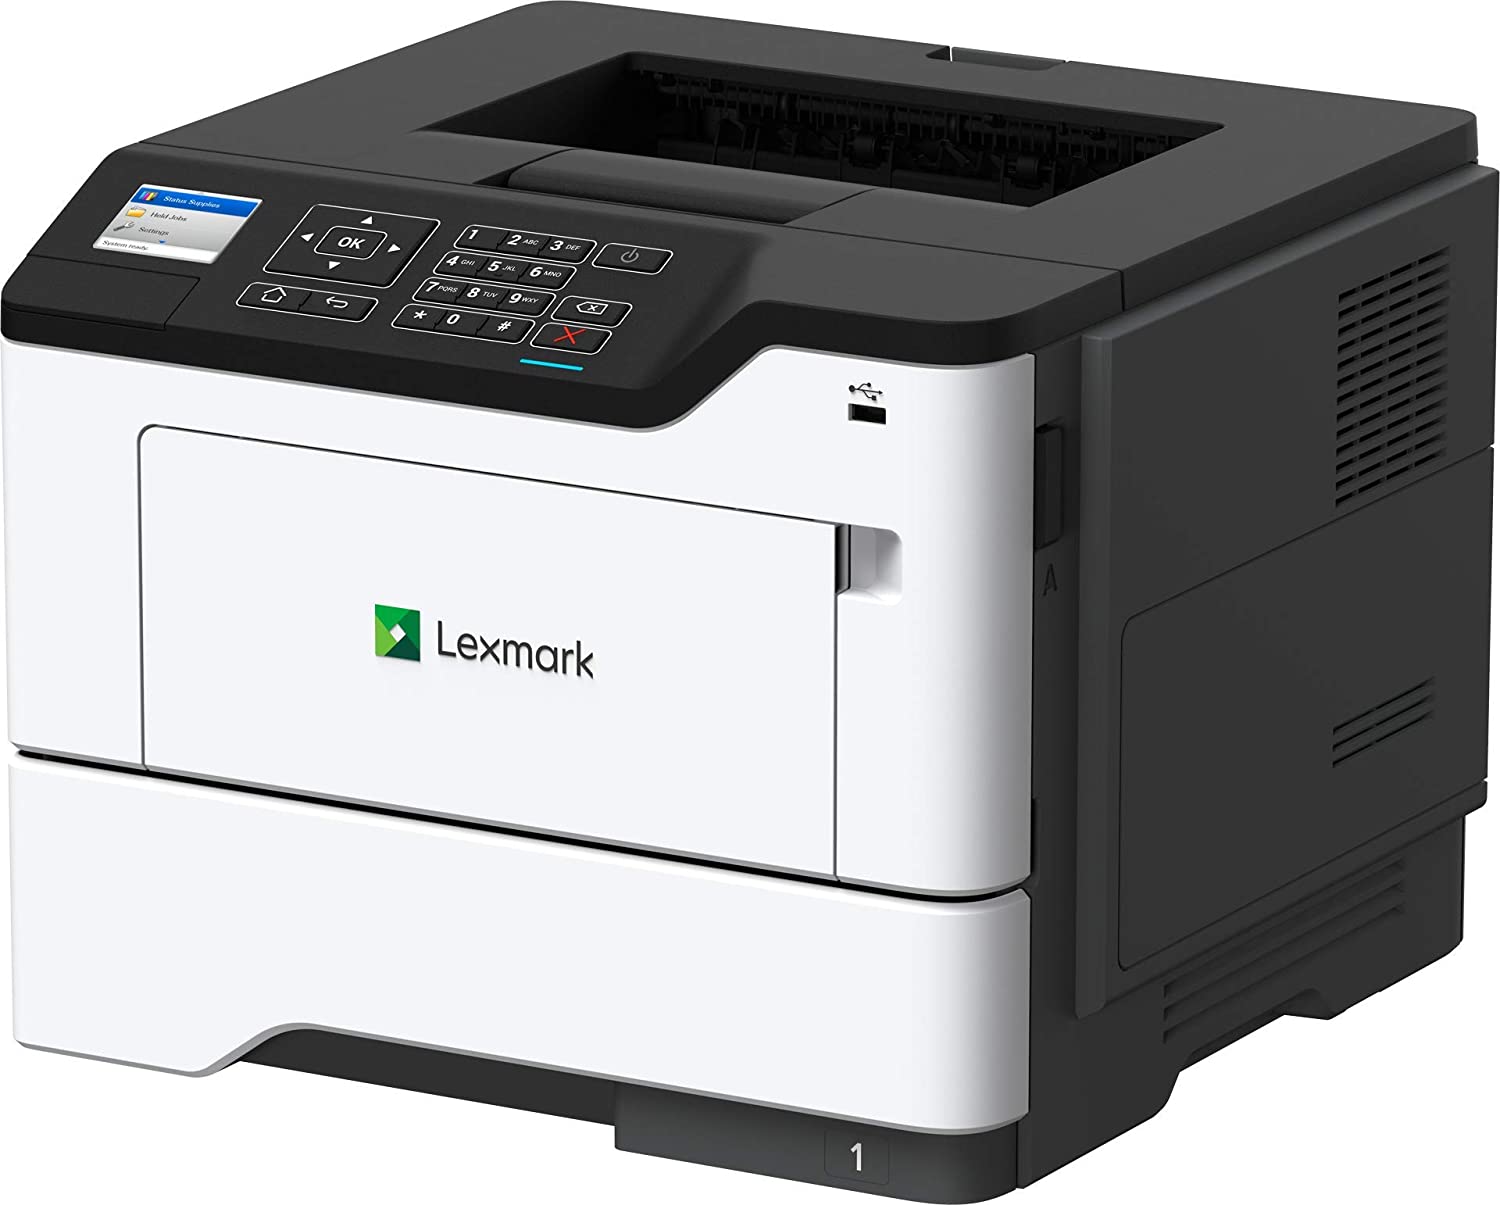 Lexmark B2650dw Monochrome Laser Printer, Duplex with Two Sided Printing, Wireless Network Capability (36SC471), Medium, White/Gray